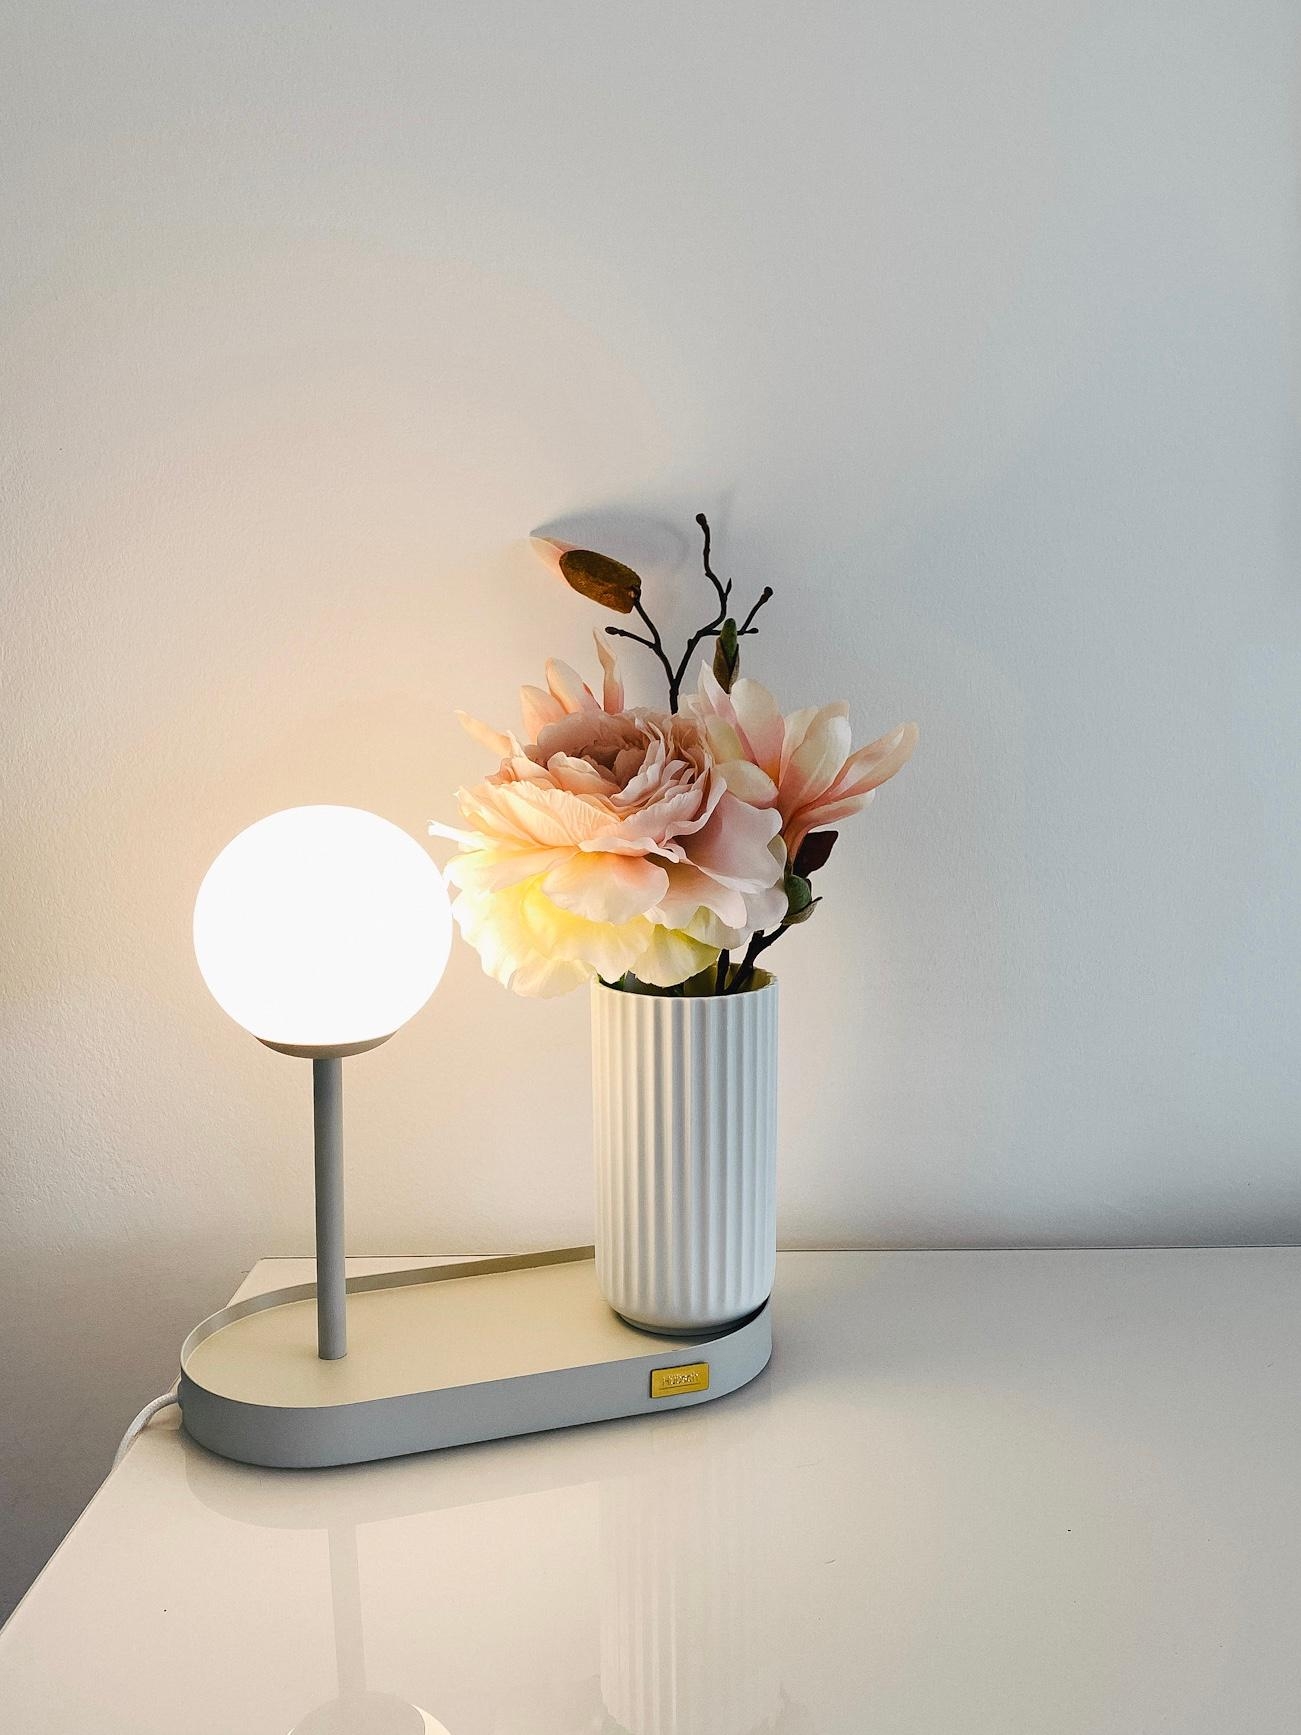 💡
#lights #bulb #vasenliebe #hübschdesign #couchstyle 